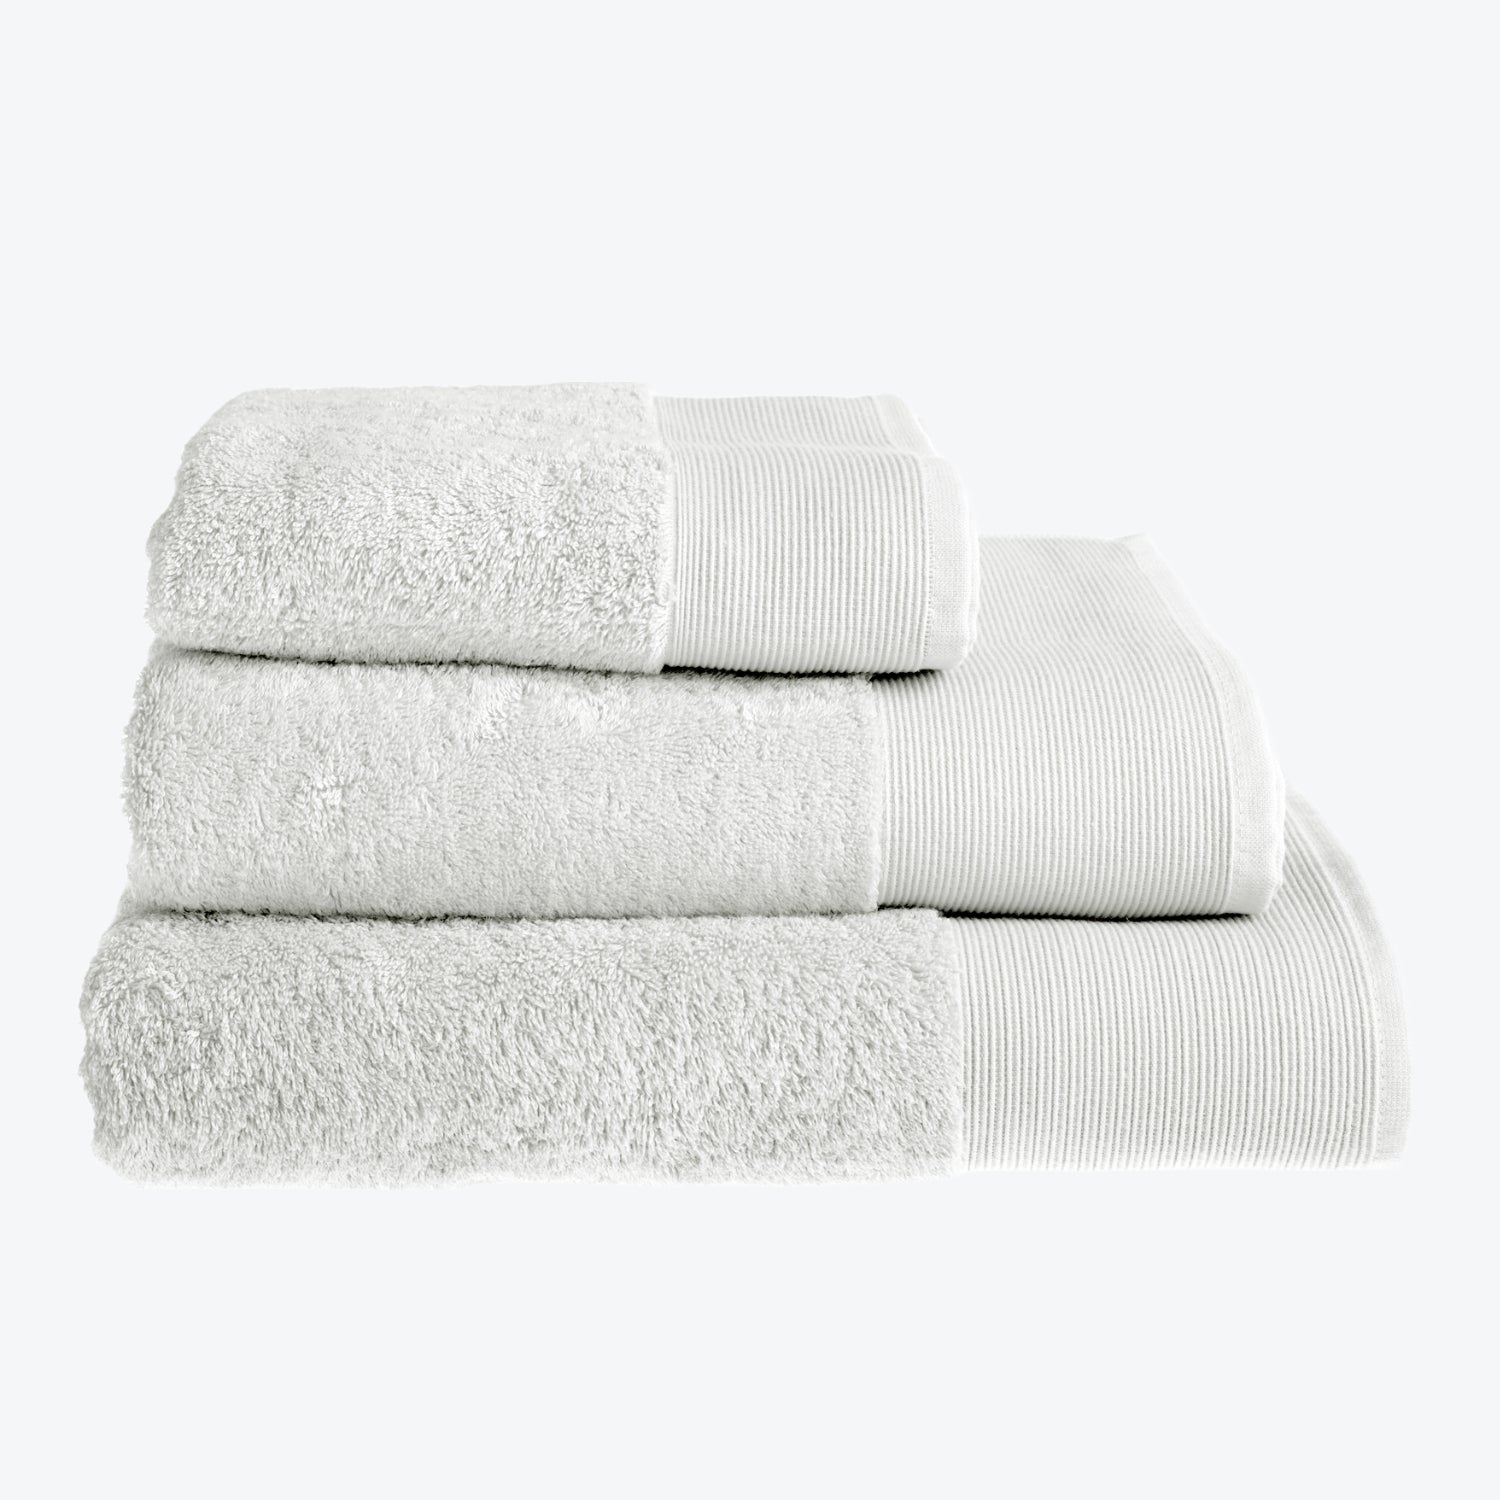 Luxury Bamboo Towels - Hypo Allergenic, Skin Friendly Bath Towels